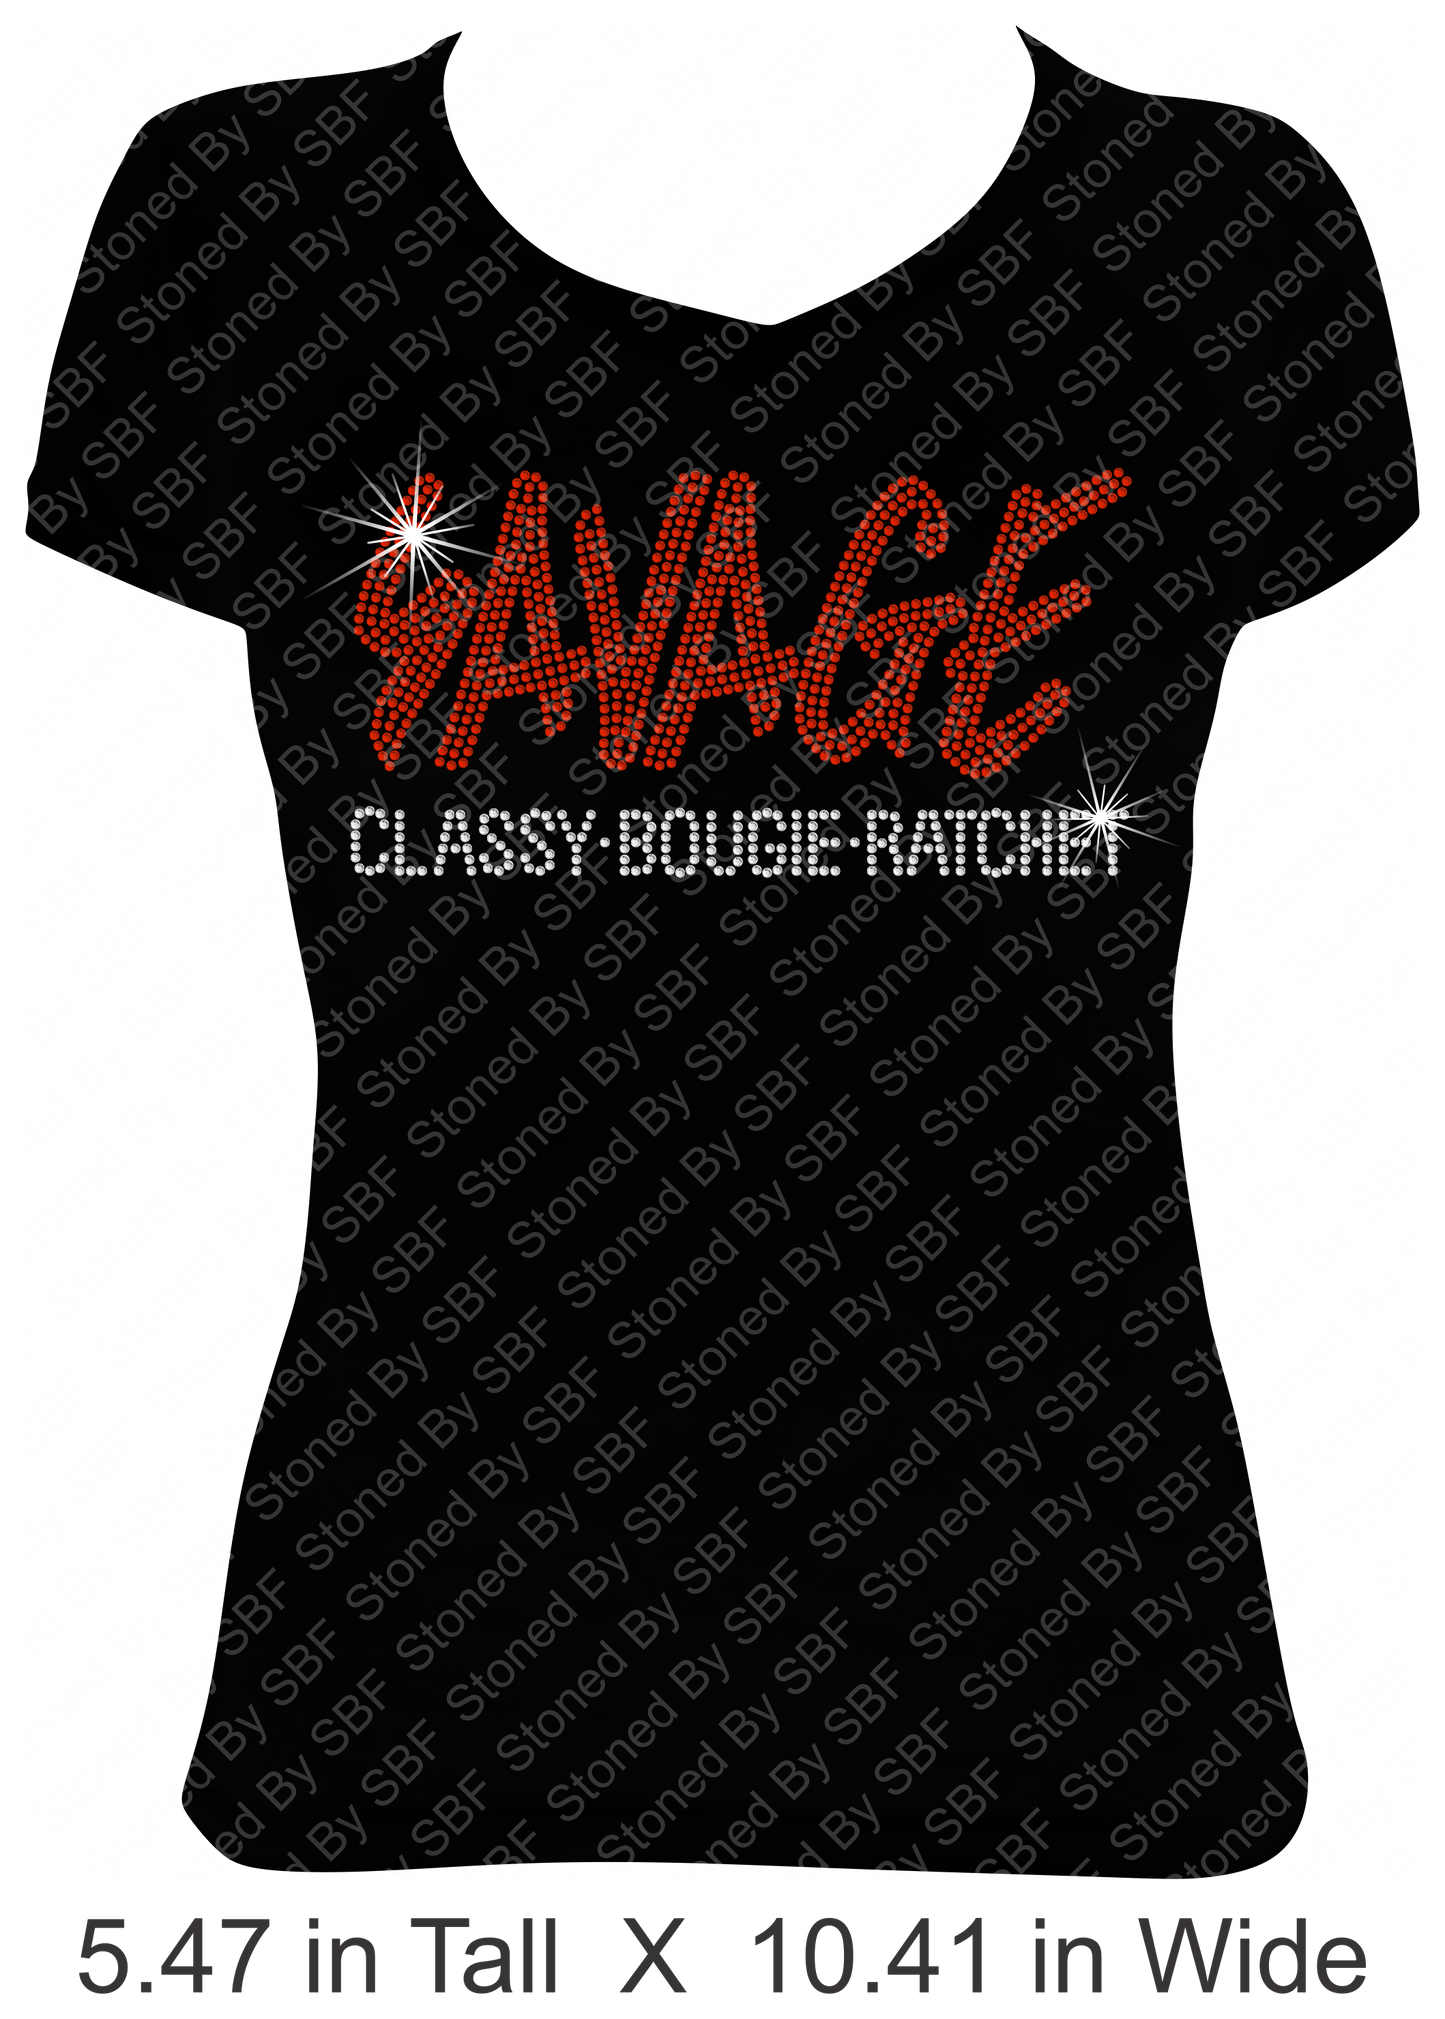 Savage Classy Bougie Rachet